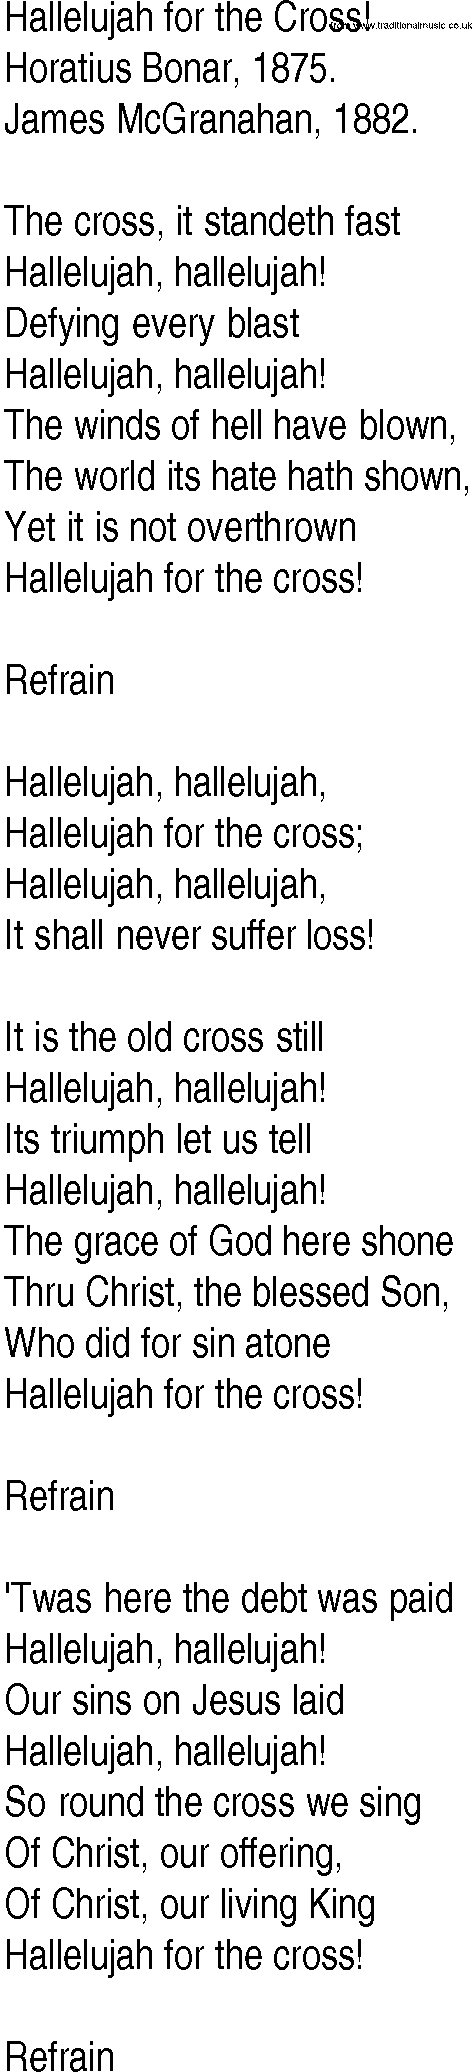 Hymn and Gospel Song: Hallelujah for the Cross! by Horatius Bonar lyrics